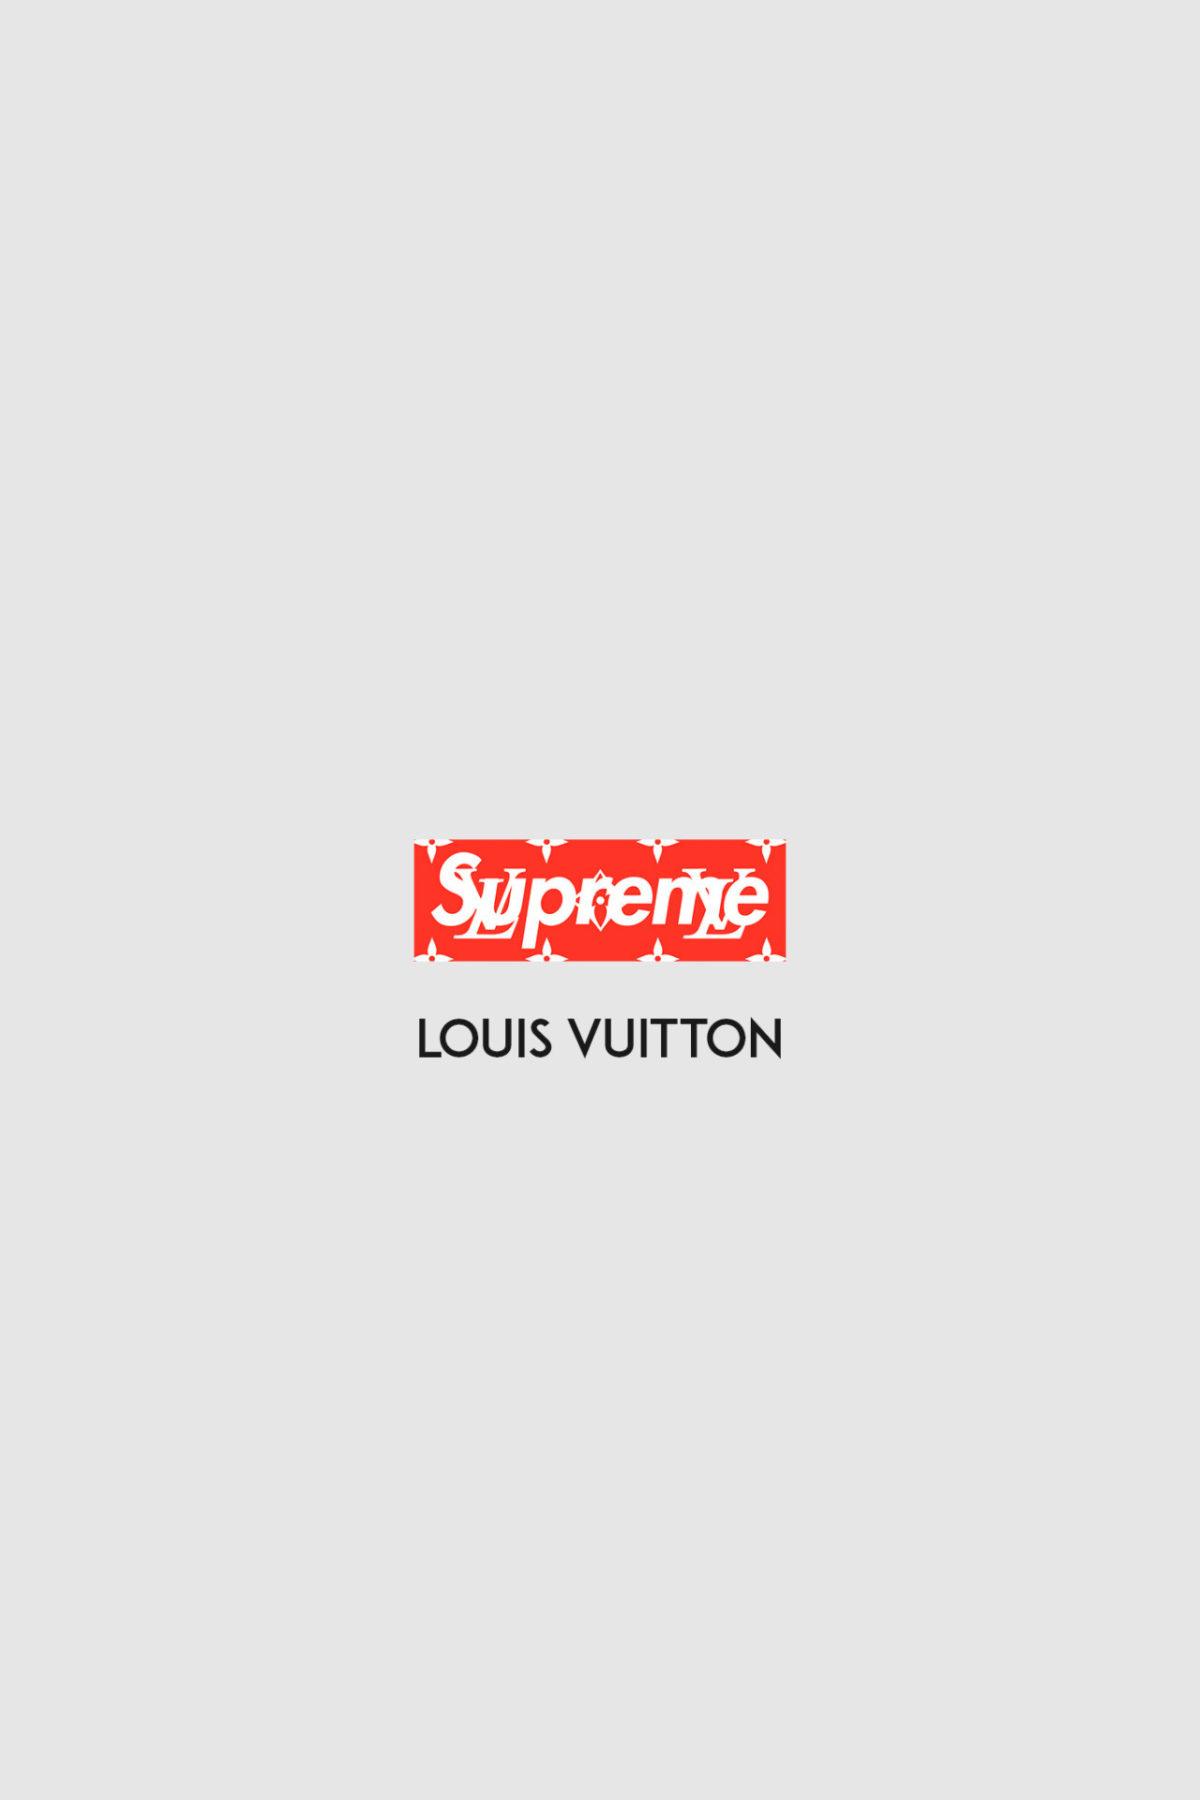 Supreme X Louis Vuitton Computer Wallpapers - Wallpaper Cave